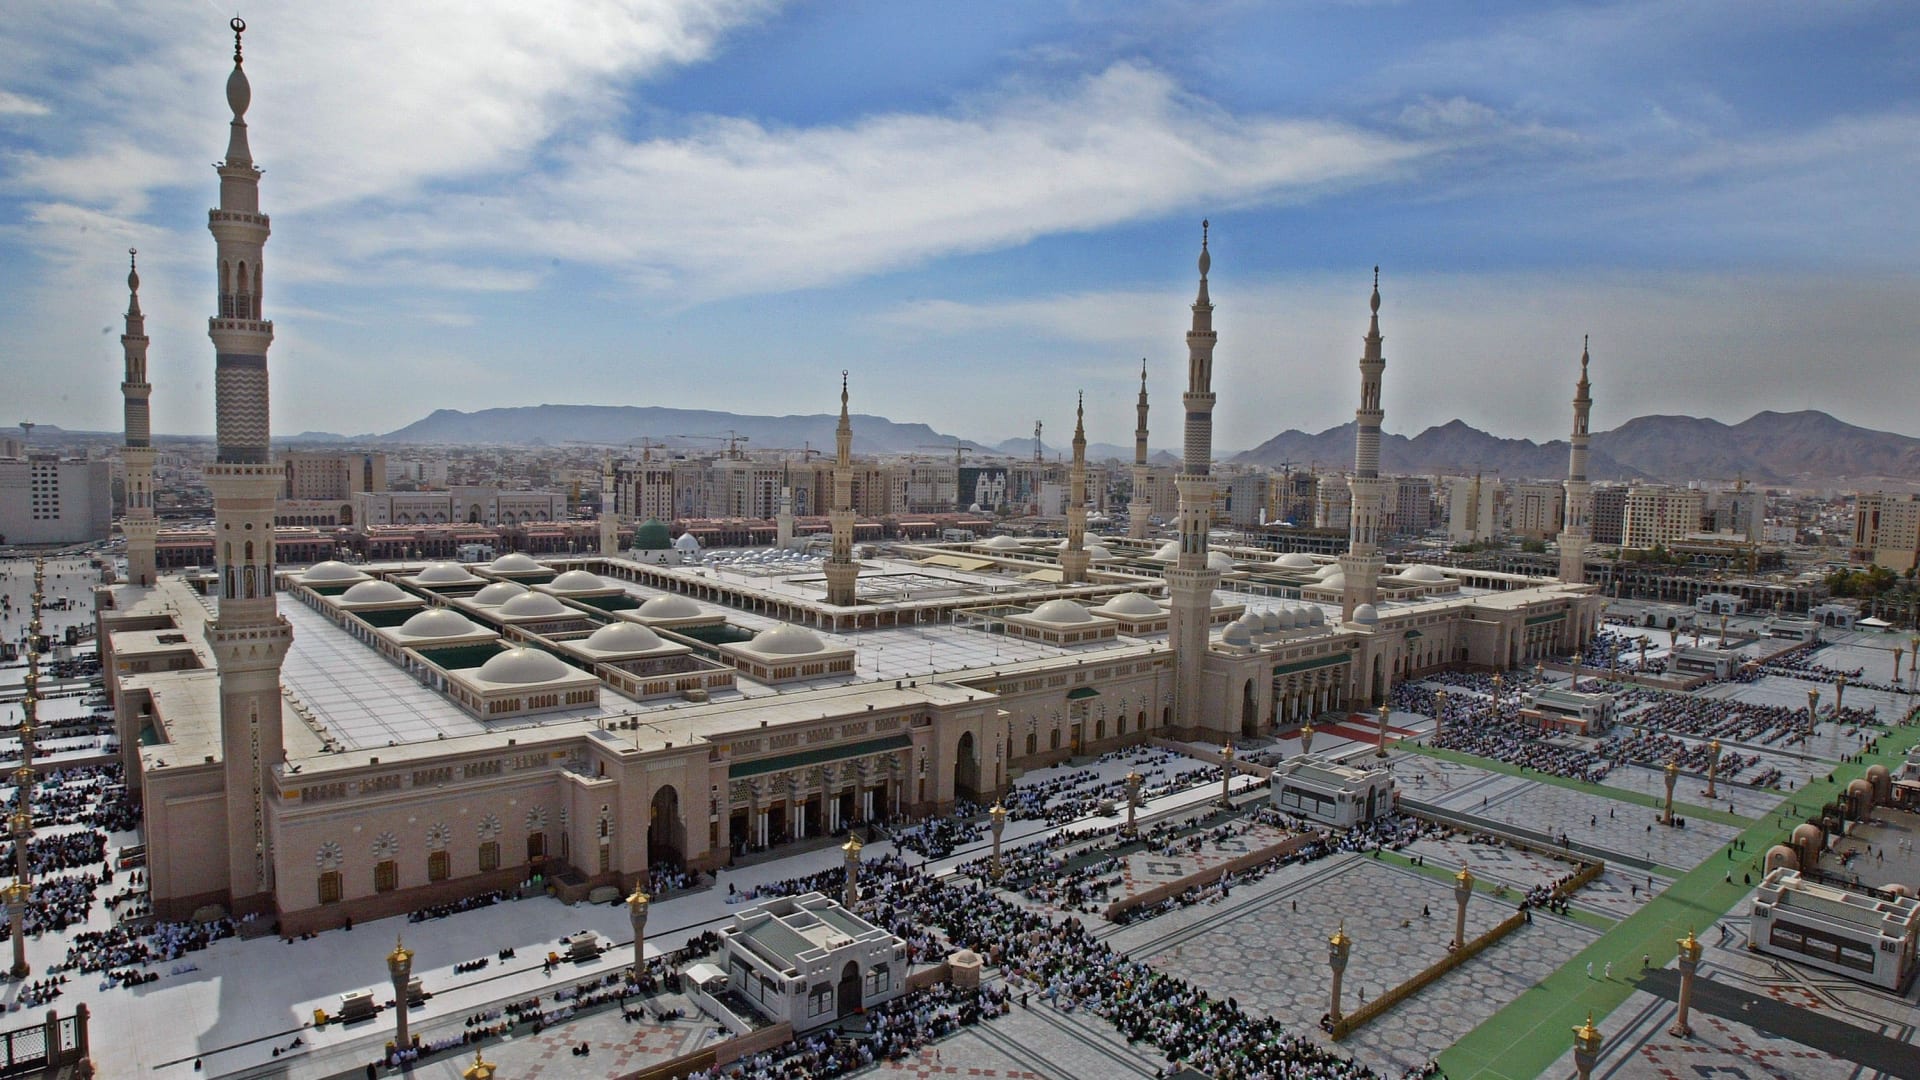 Bin Salman Company has started a new project in Medina